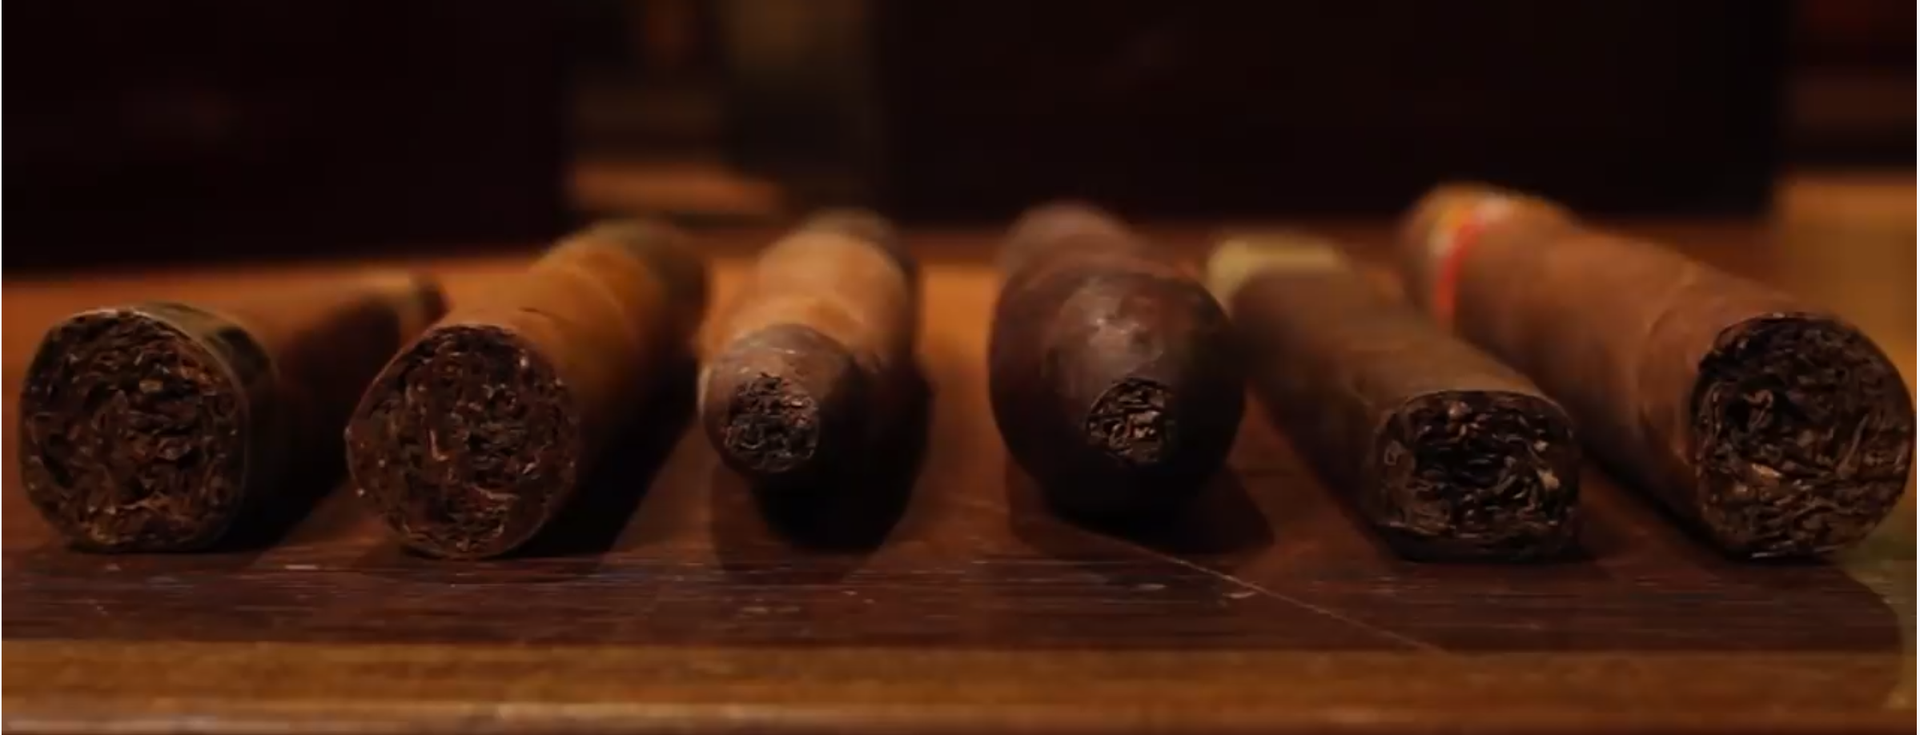 The Cigar: An Introduction